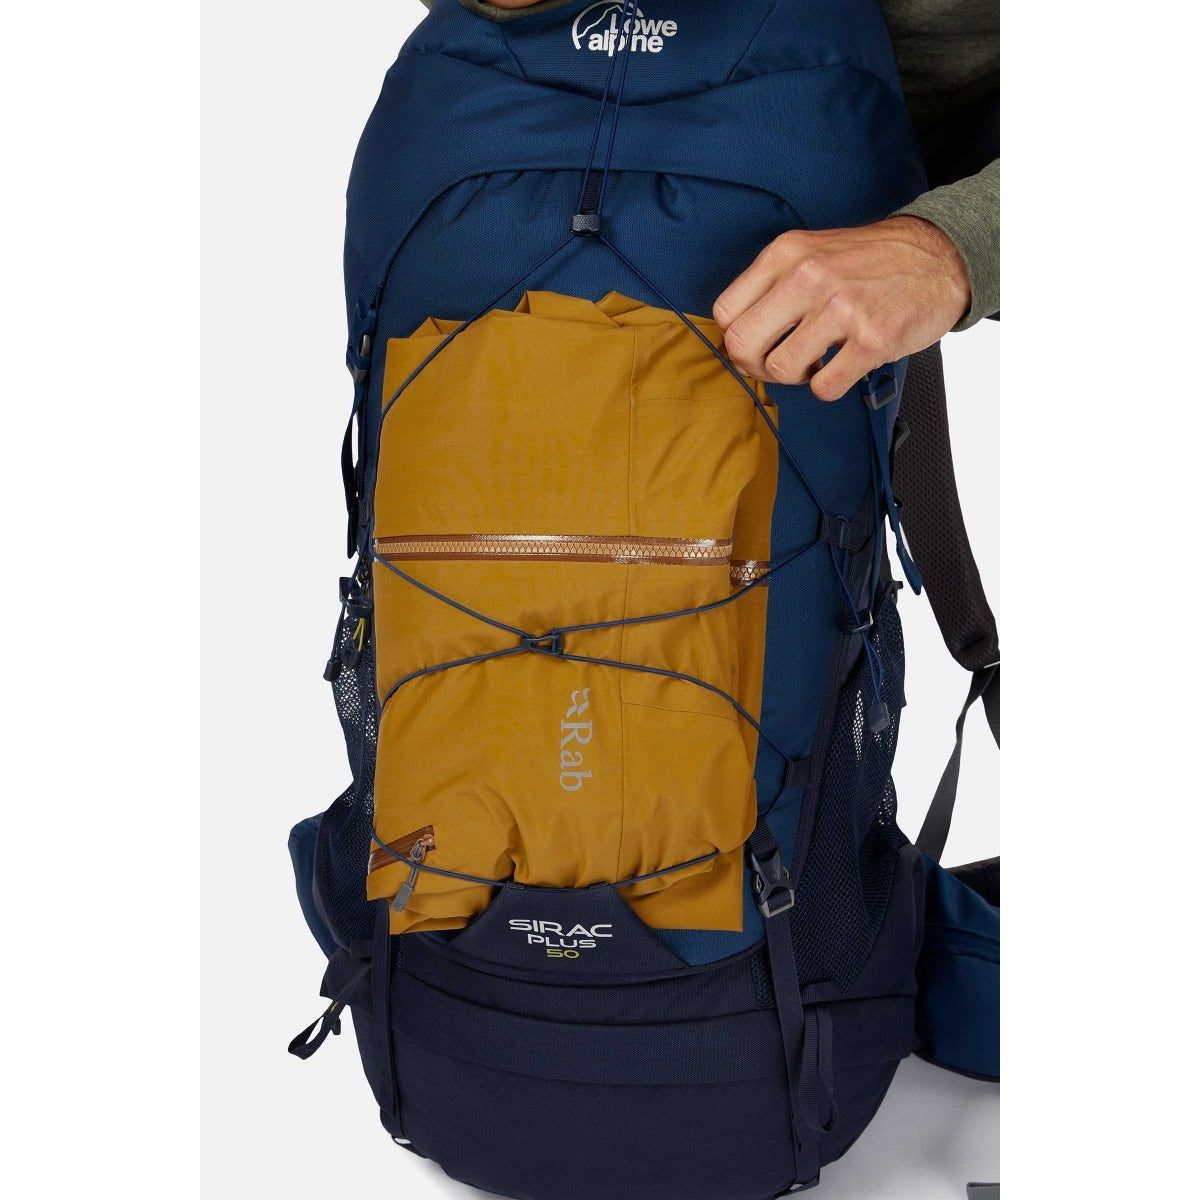 Lowe Alpine Mens Sirac Plus 50 Litre Hiking Pack